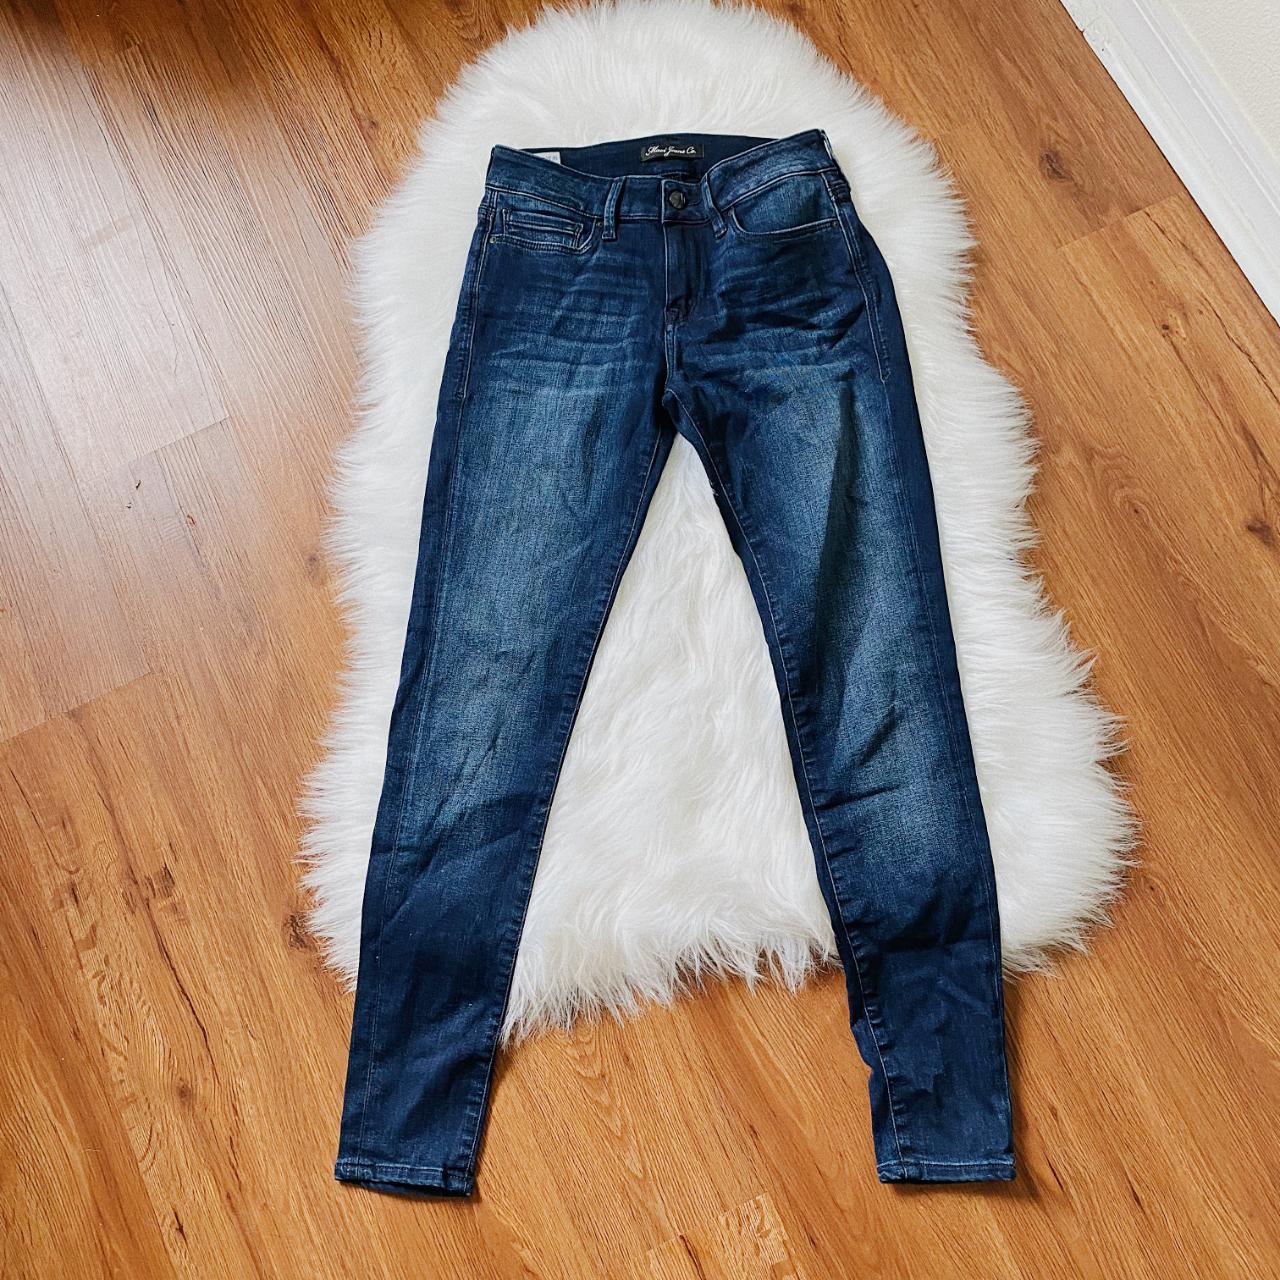 Product Image 1 - Mavi jeans co size 25